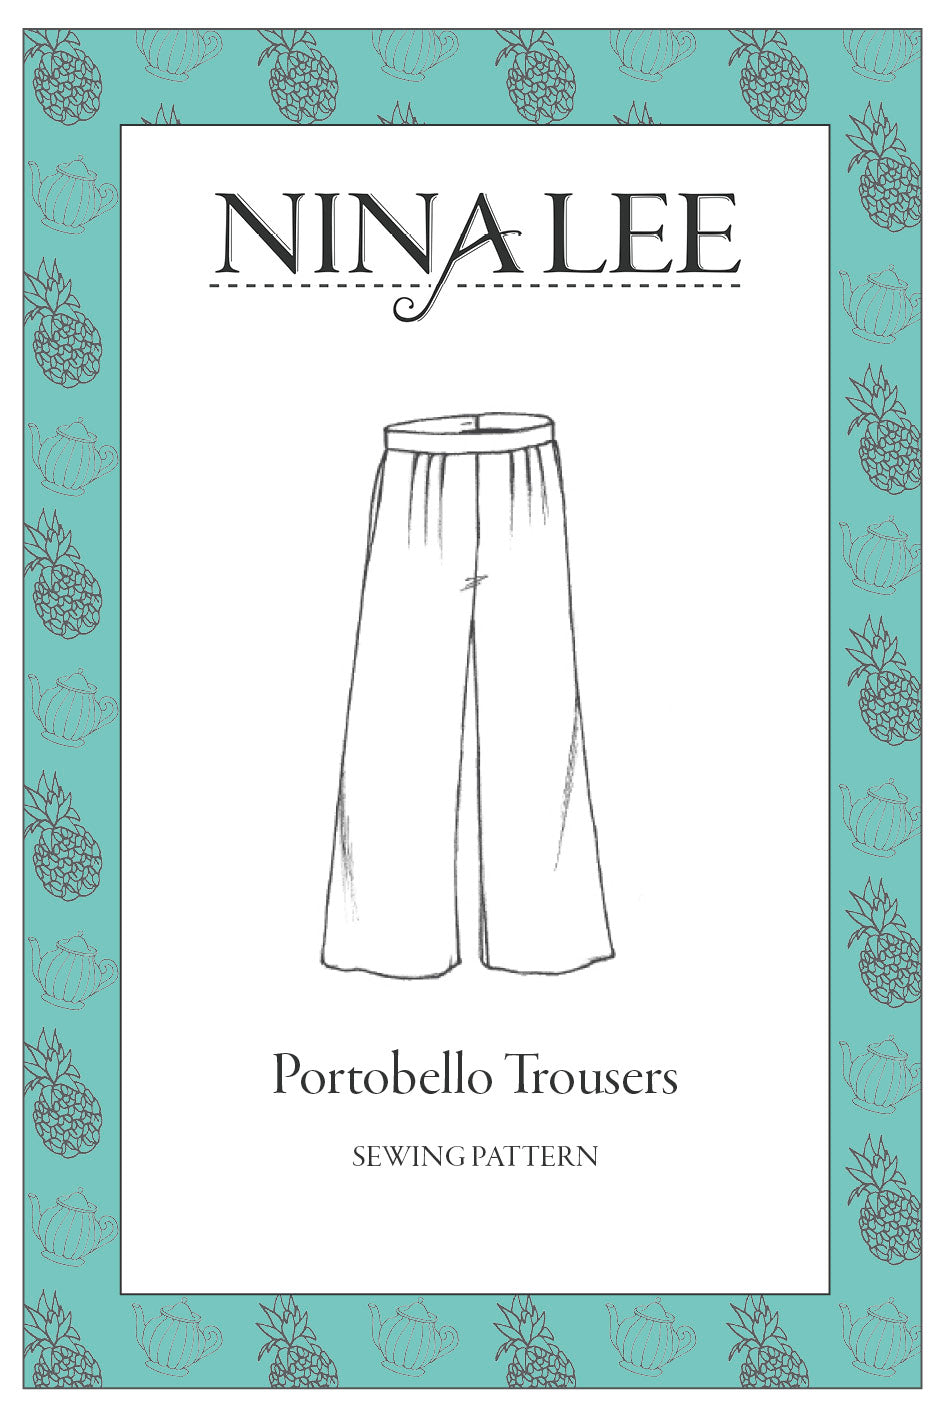 NINALEE Portobello Trousers Sewing Pattern